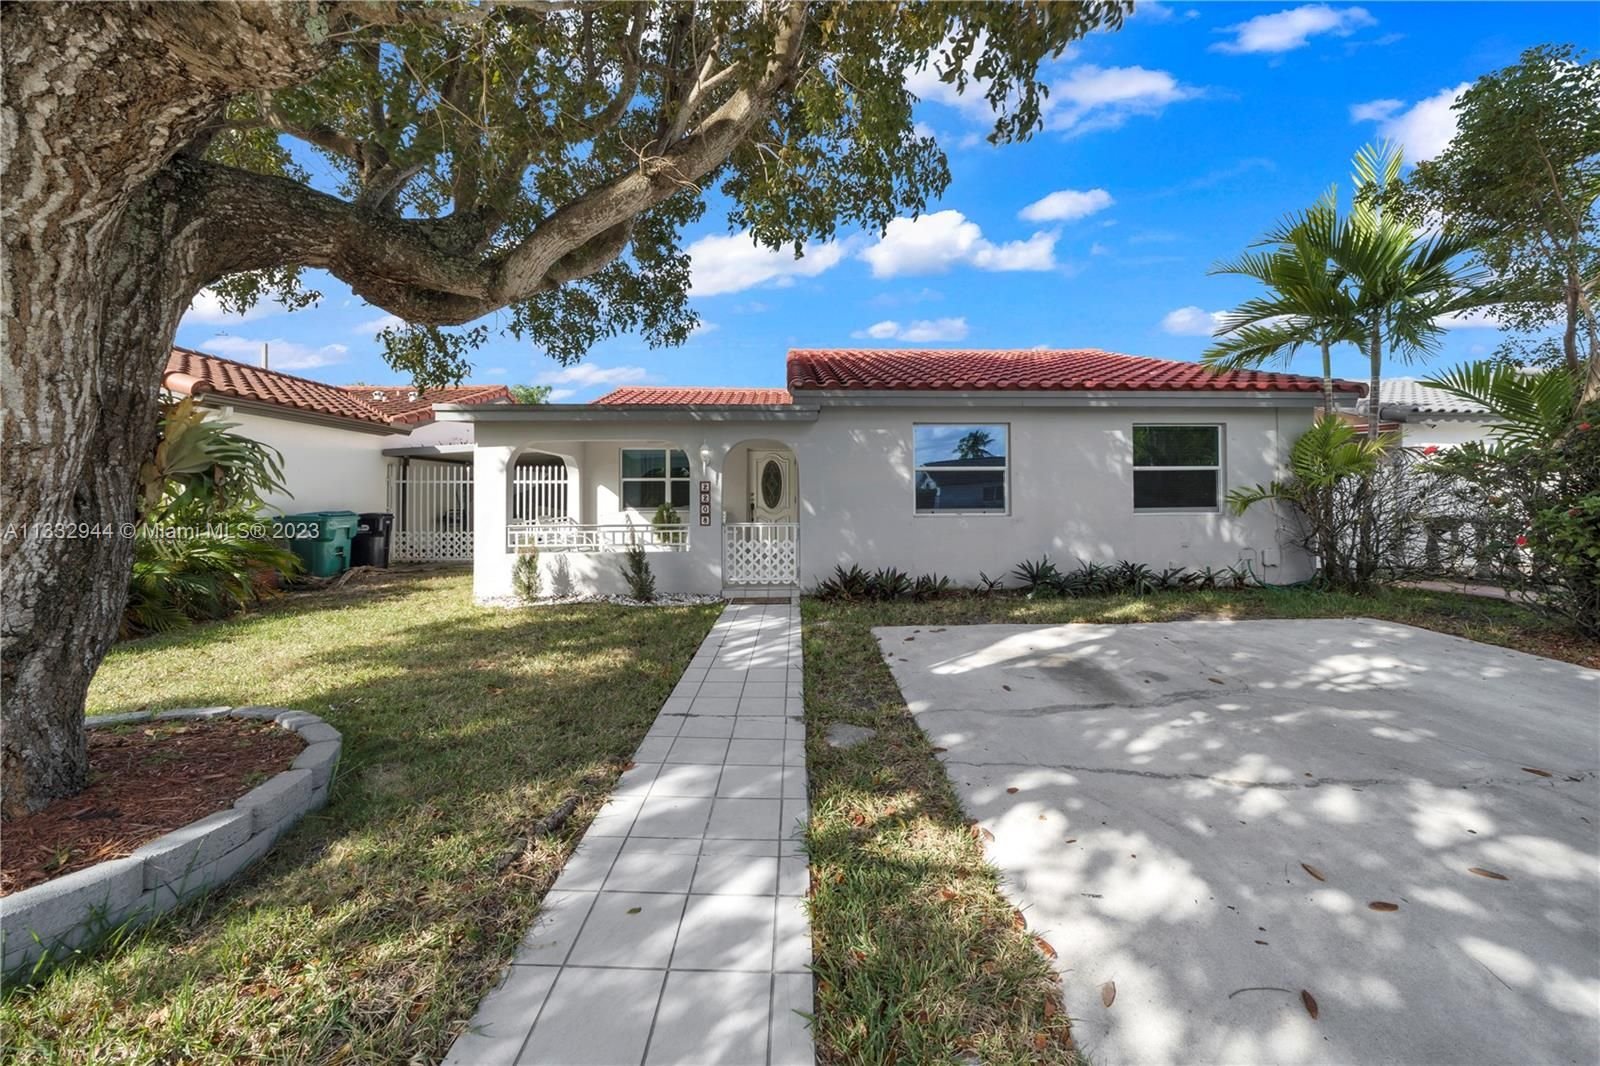 Real estate property located at 2208 138th Ct, Miami-Dade County, Miami, FL